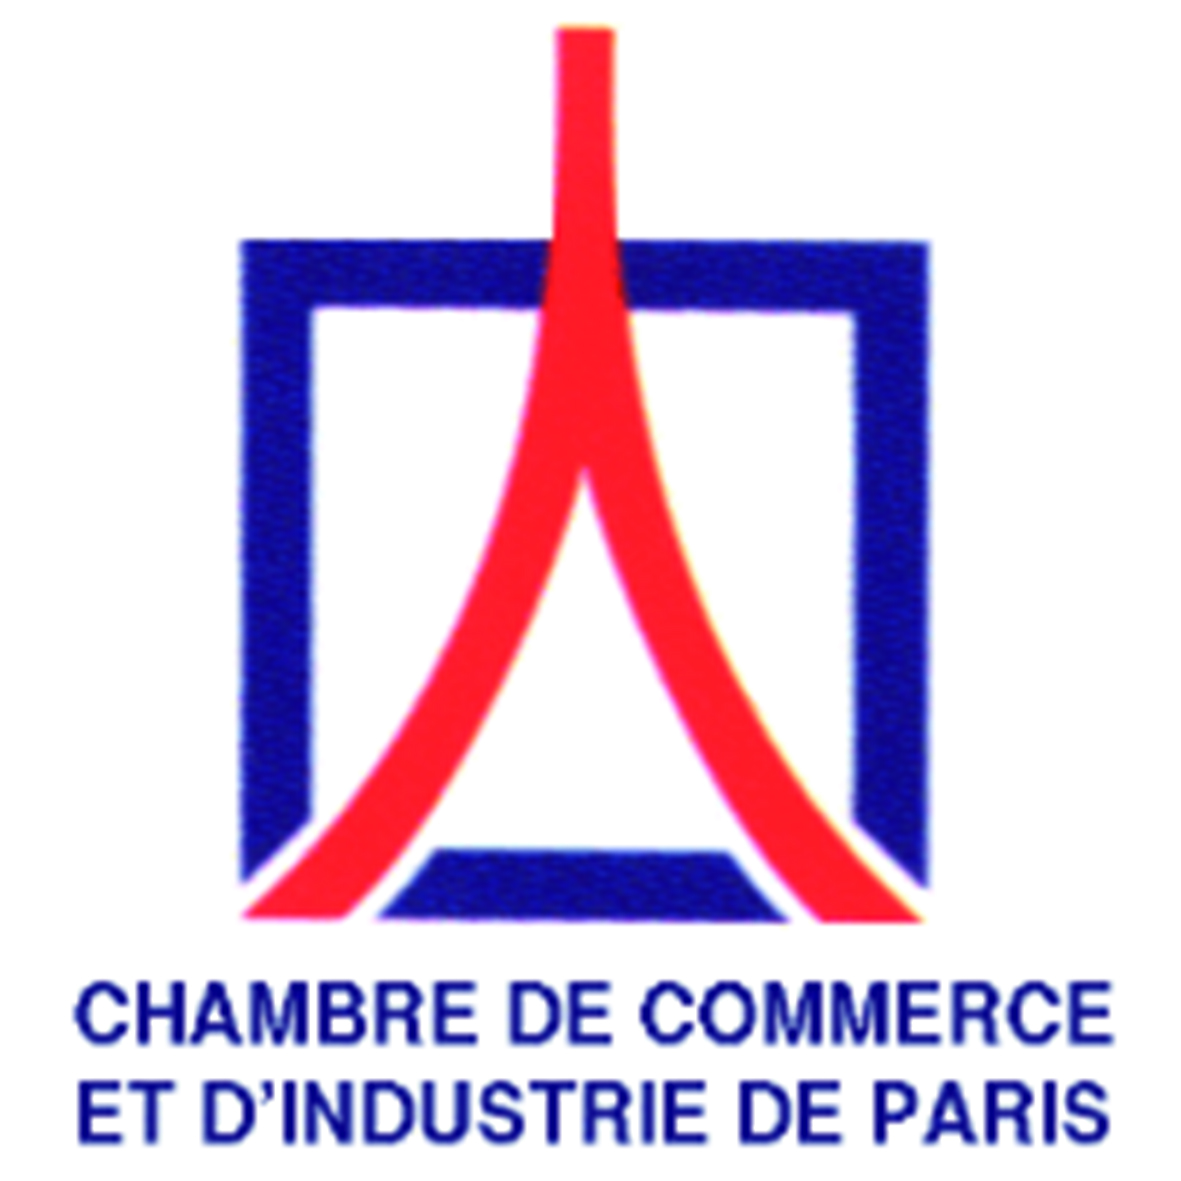 Chambre de Commerce Logo photo - 1